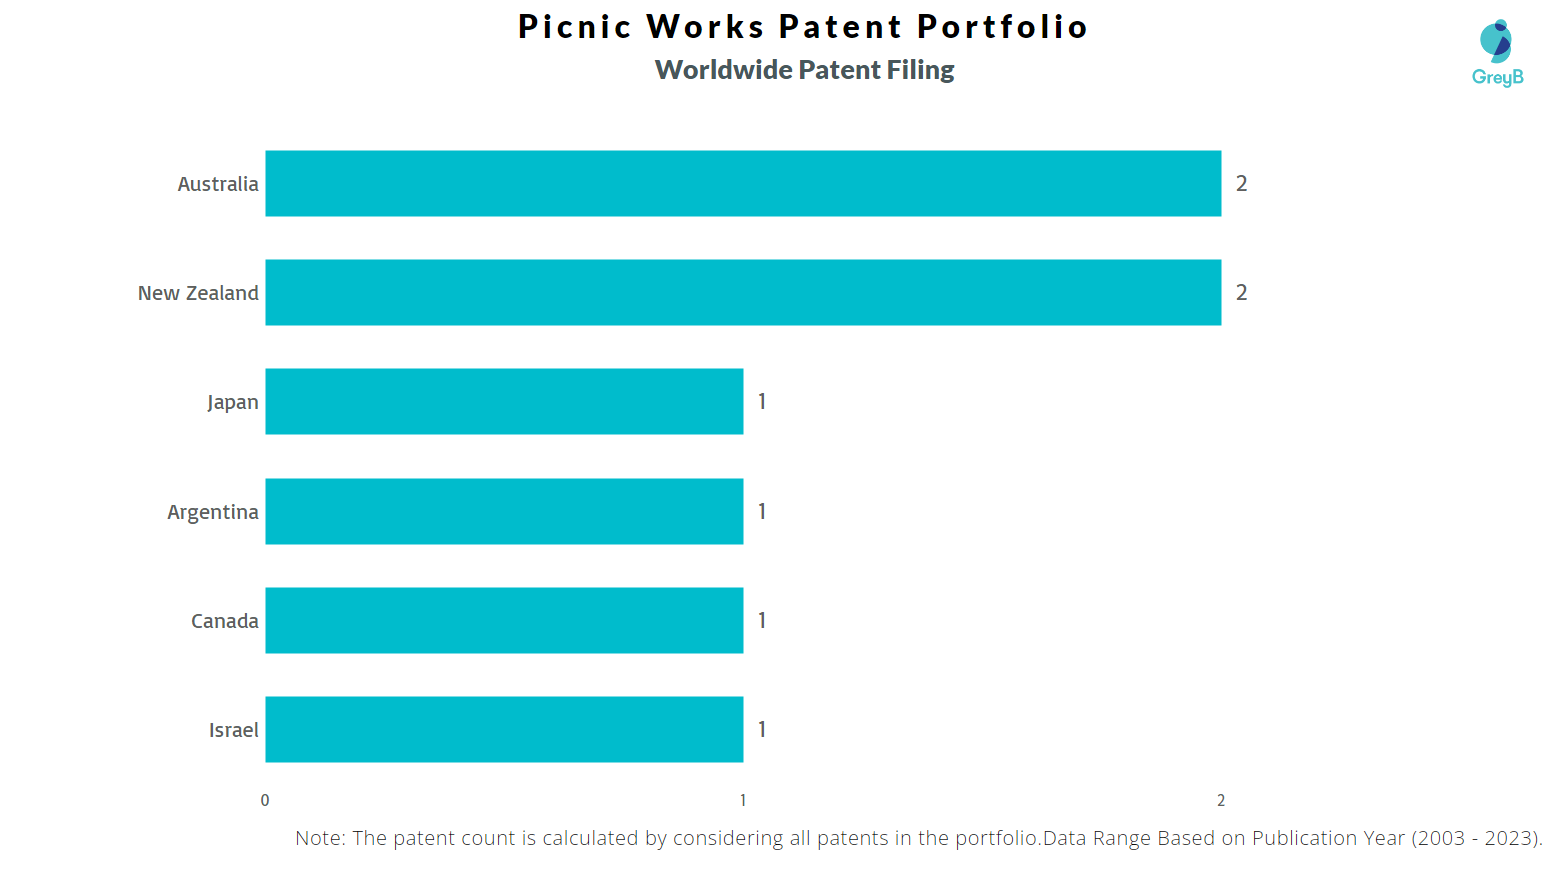 Picnic Works Worldwide Patent Filing